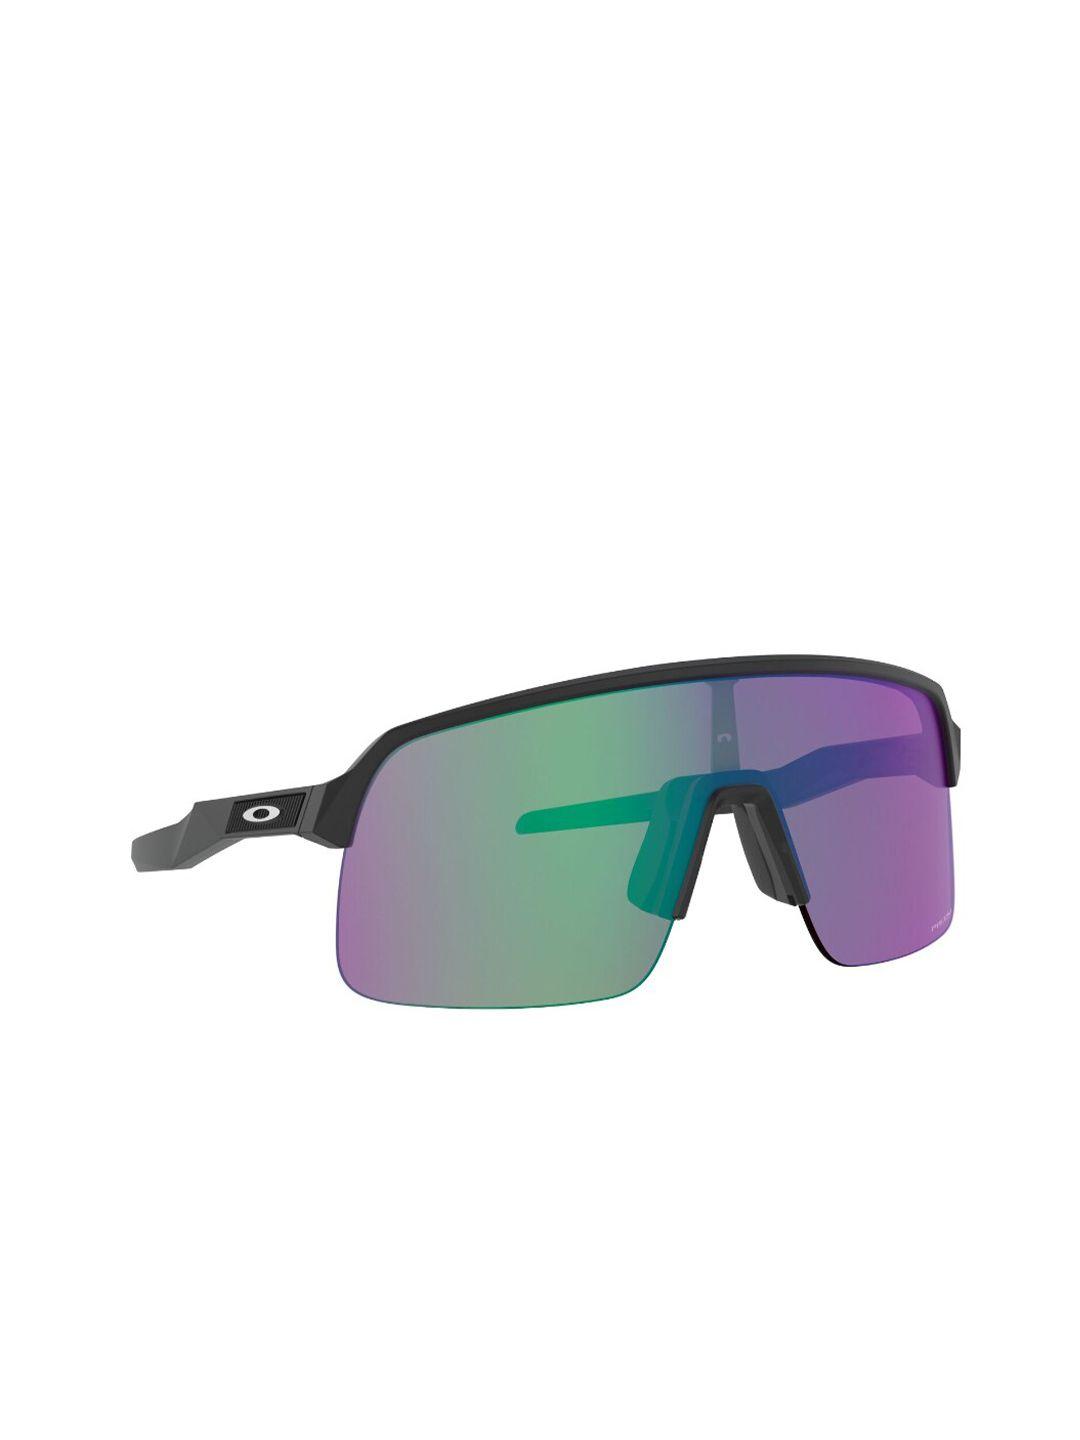 oakley-men-lens-&-shield-sunglasses-with-uv-protected-lens